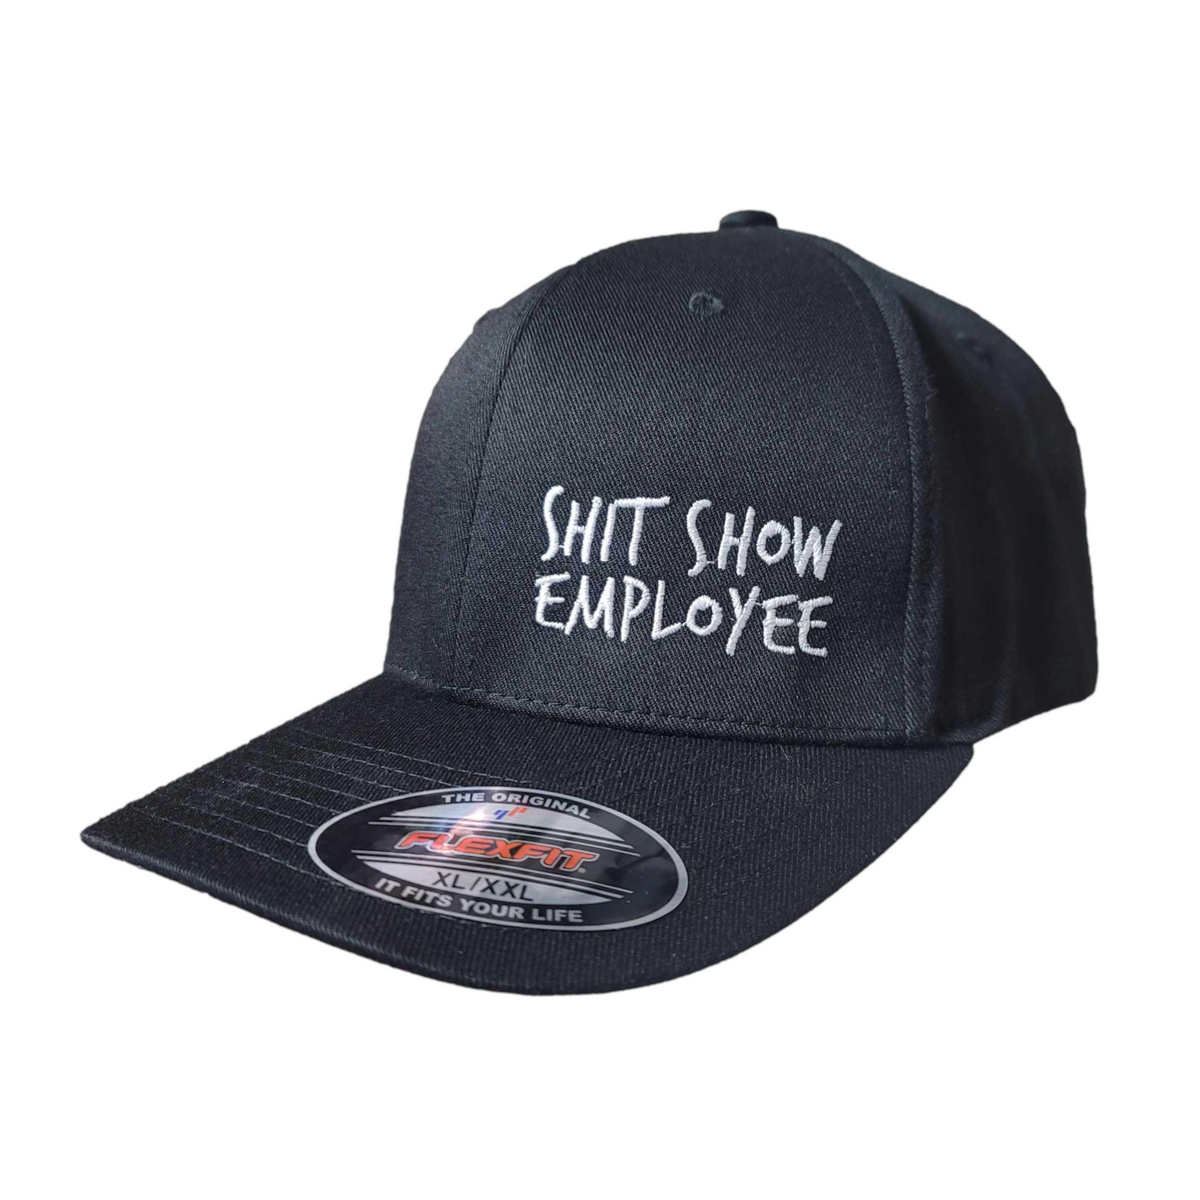 Shitshow Employee FLEXFIT Embroidered Hat